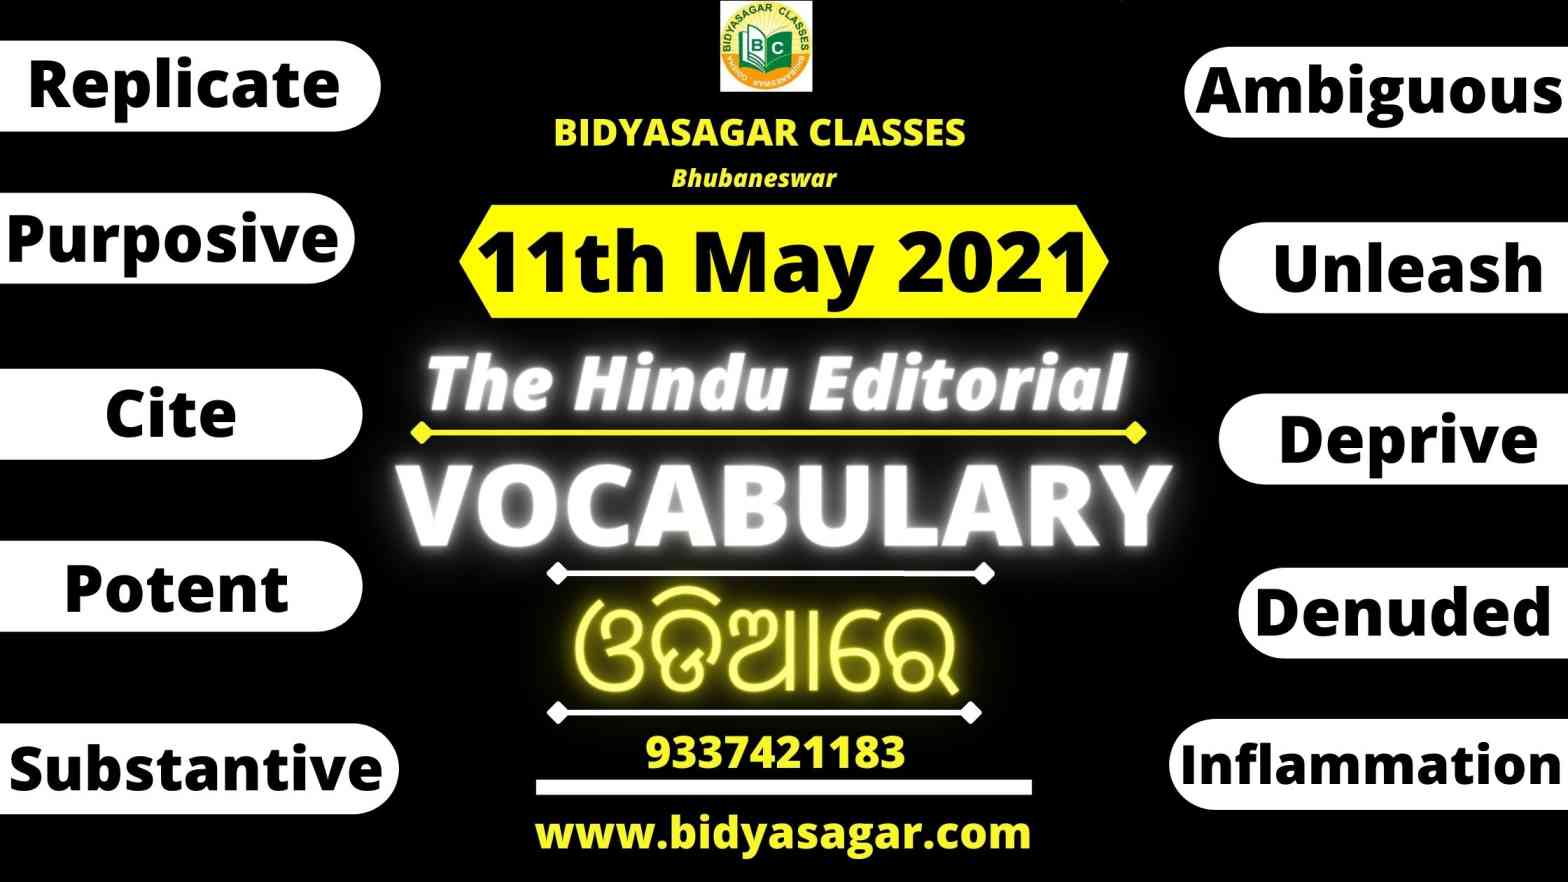 The Hindu Editorial Vocabulary of 11th May 2021